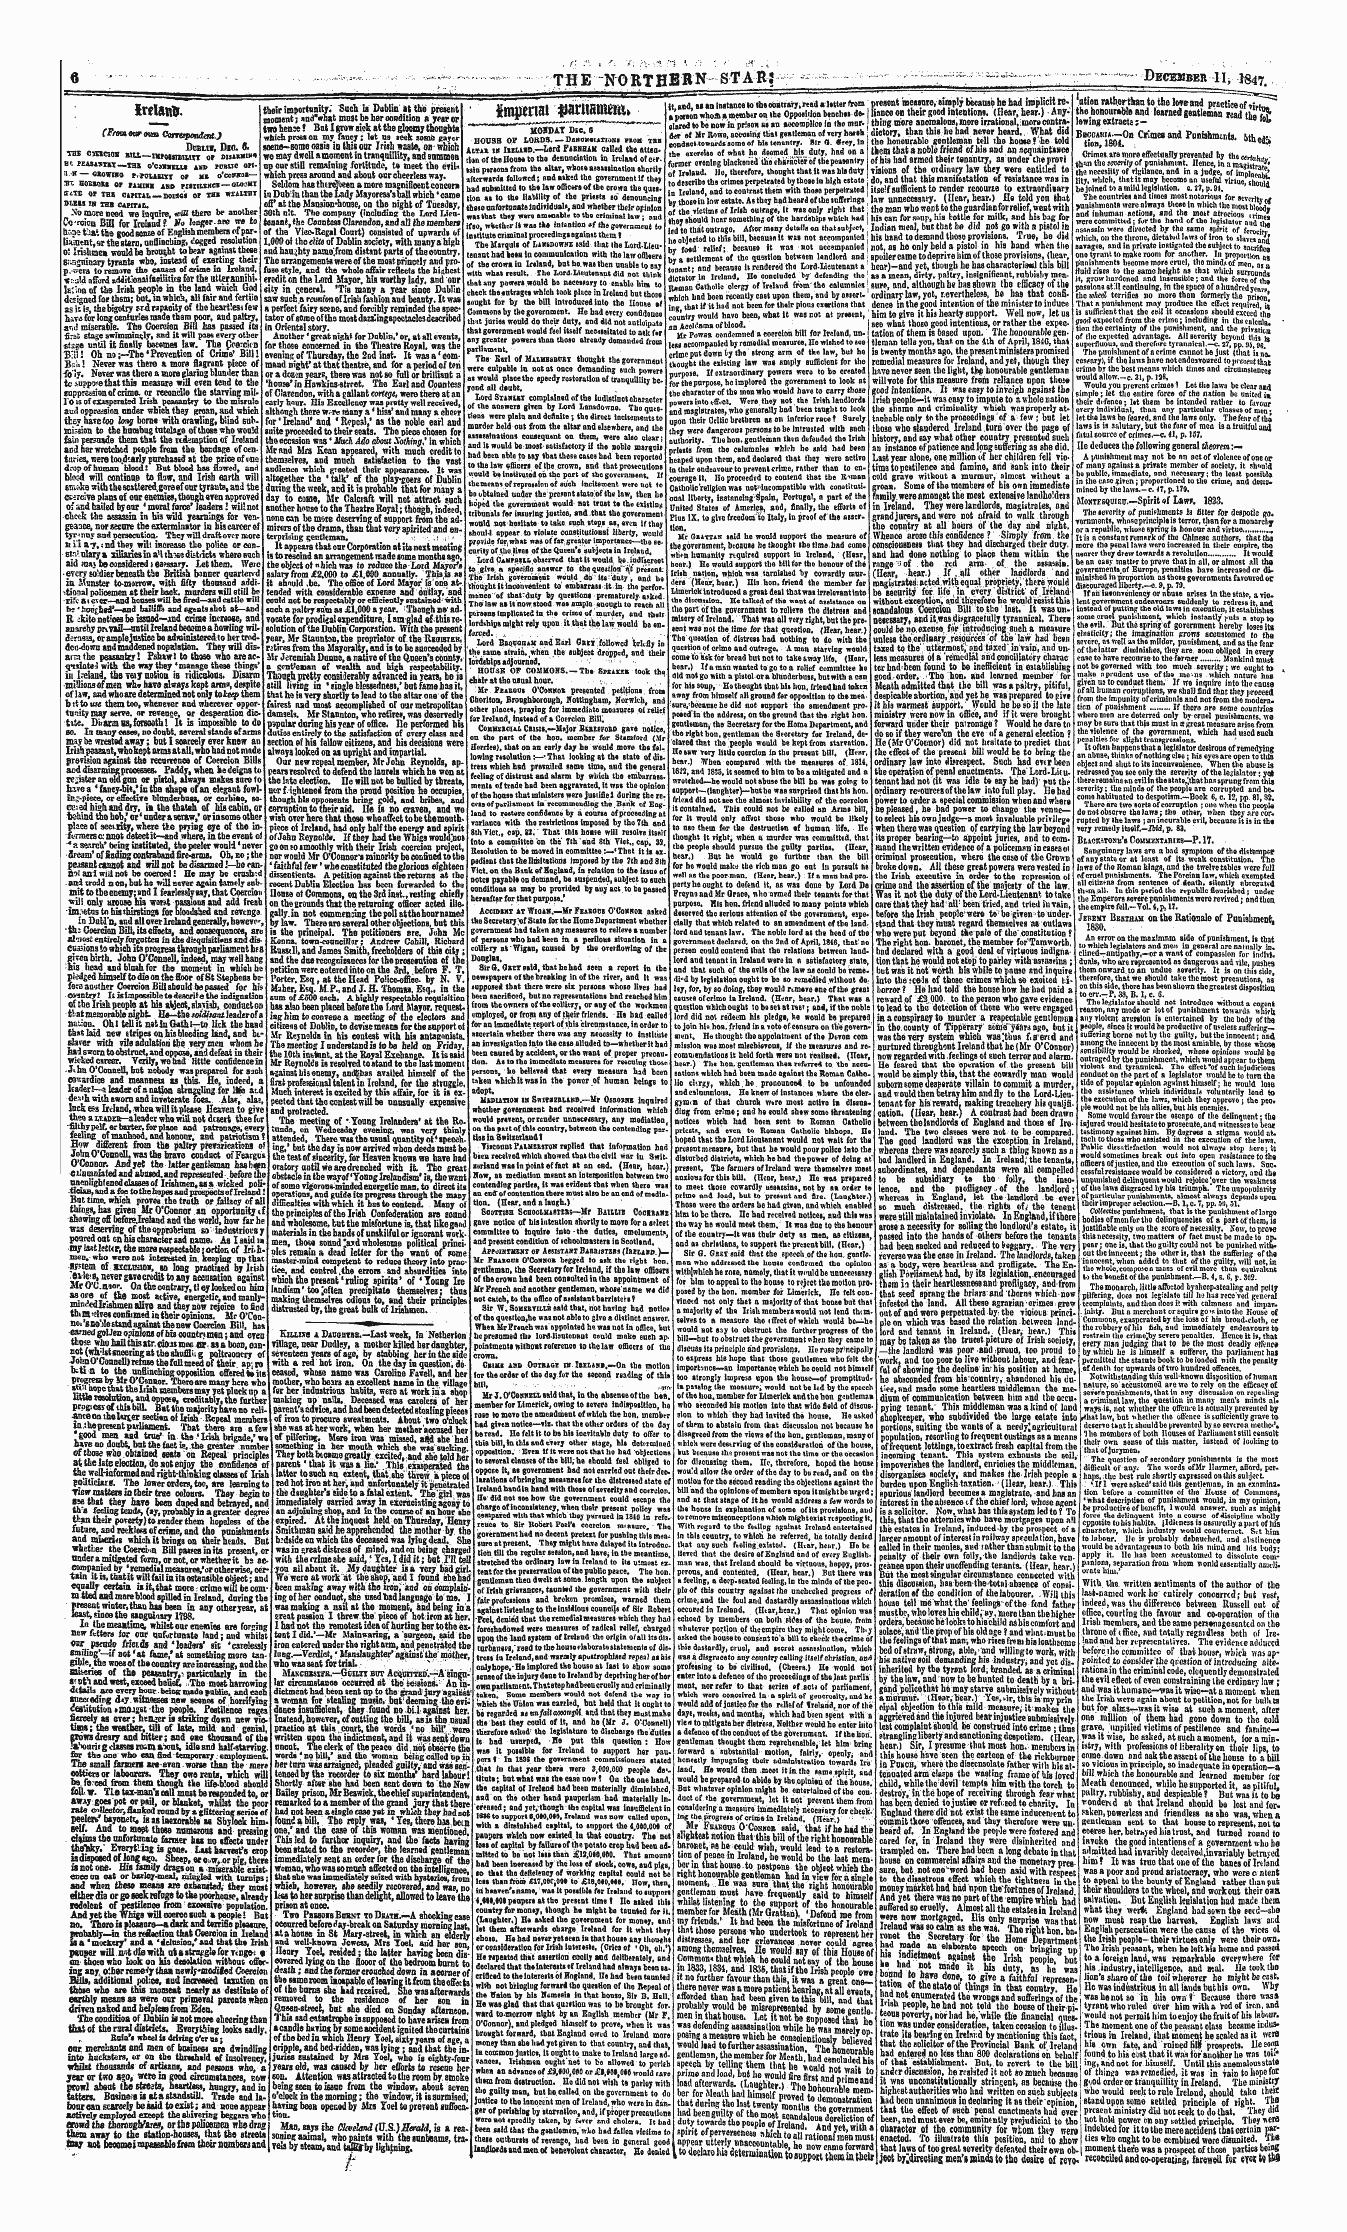 Northern Star (1837-1852): jS F Y, 1st edition - Irelatft.